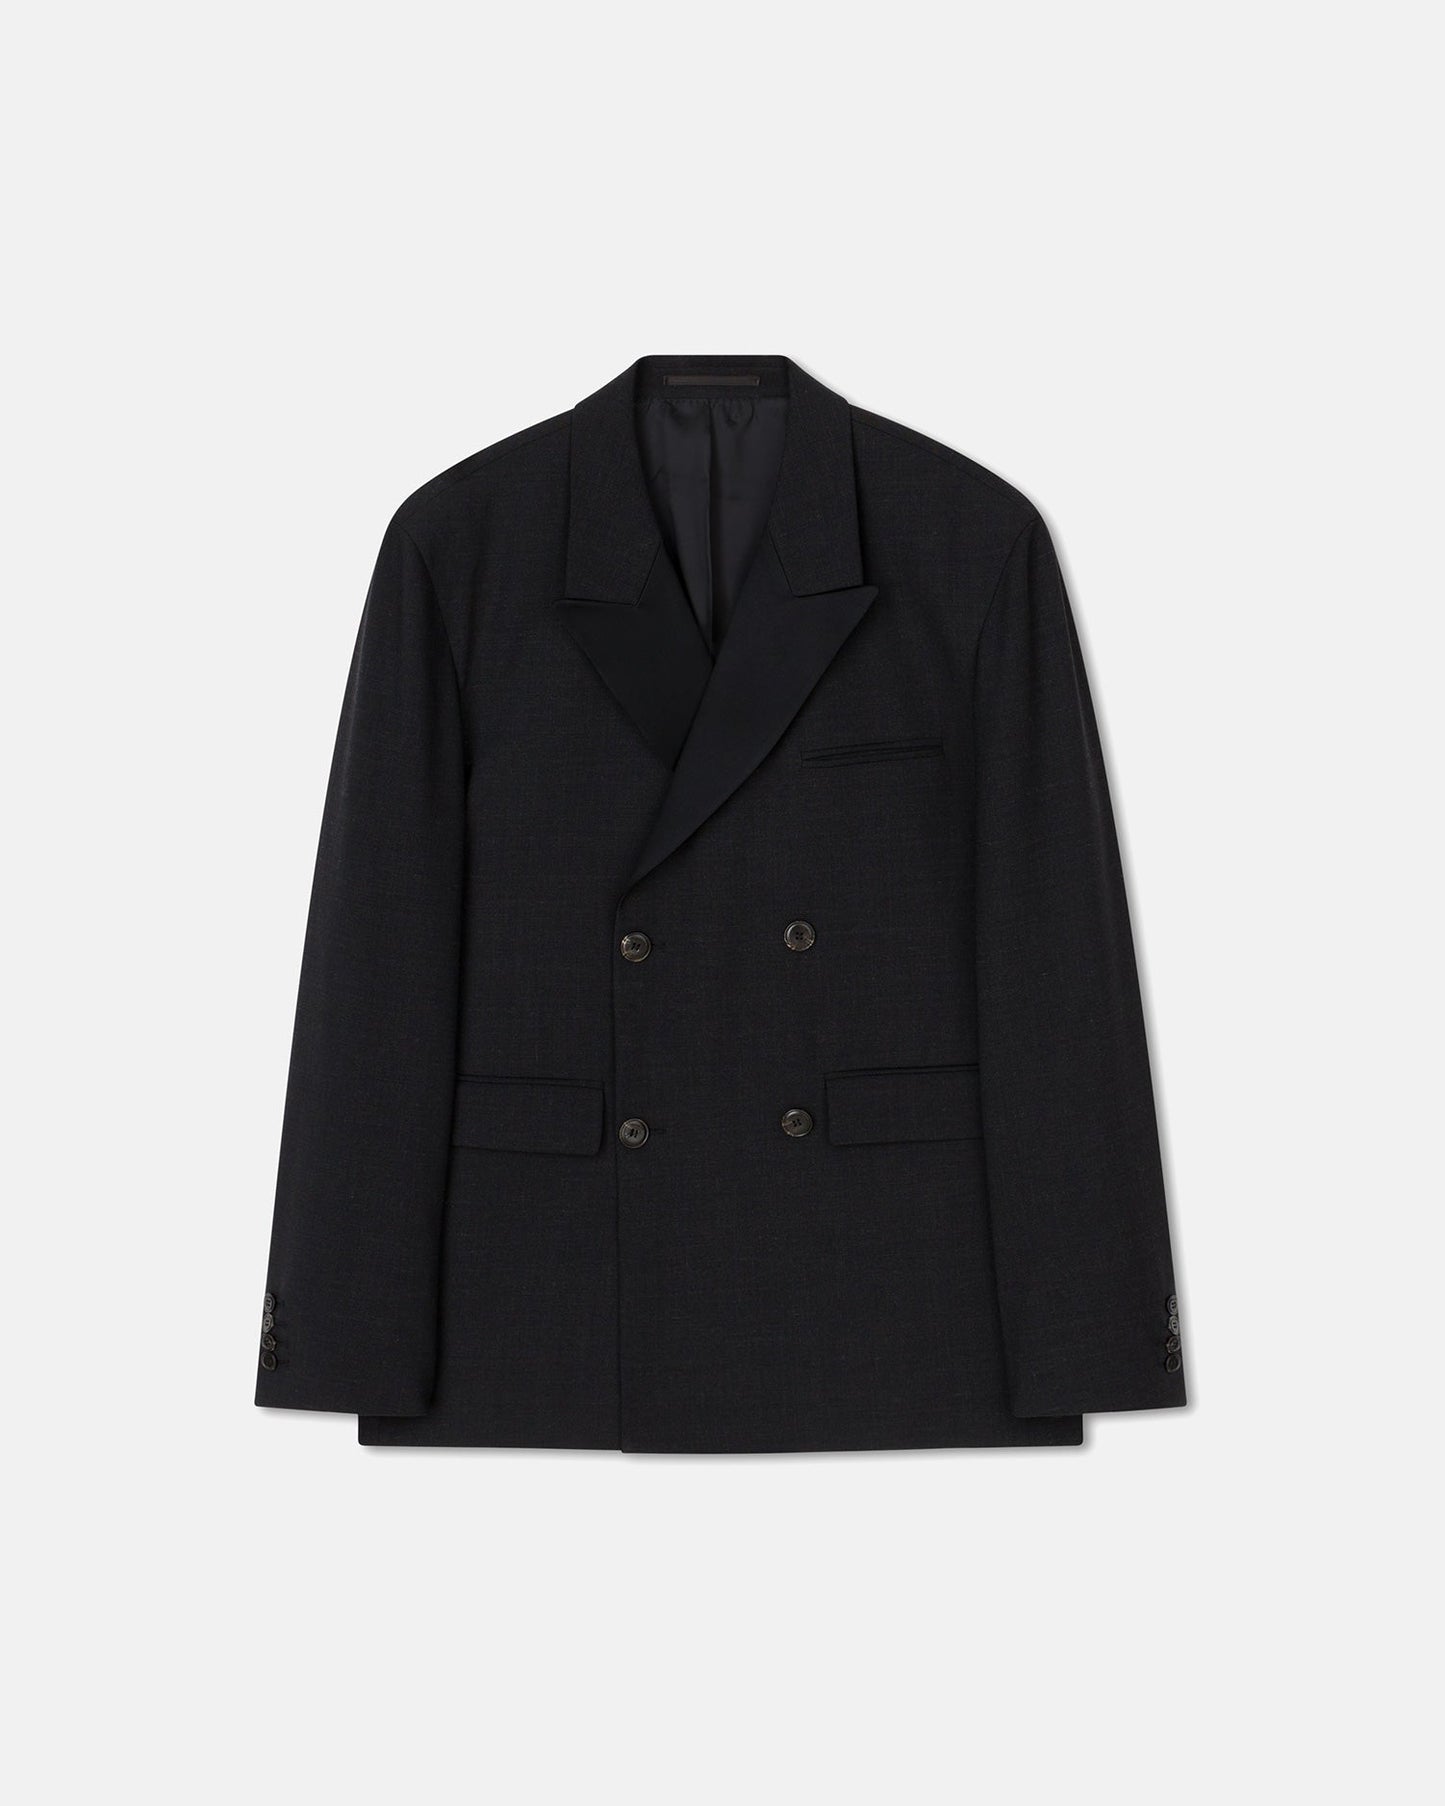 Collas - Satin-Trimmed Suit Jacket - Off Black